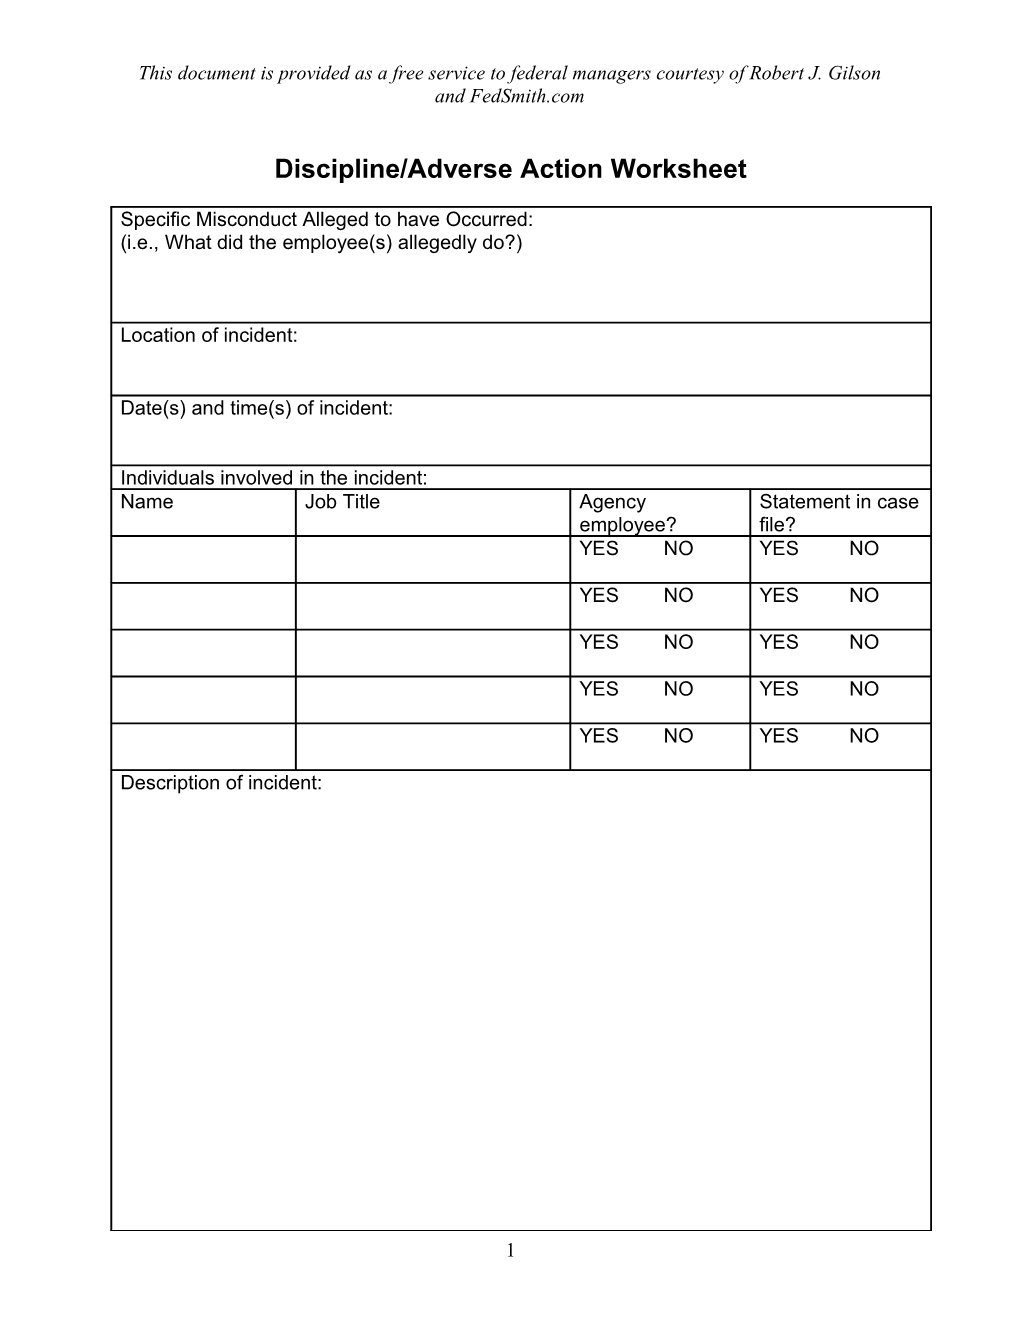 Discipline/Adverse Action Worksheet